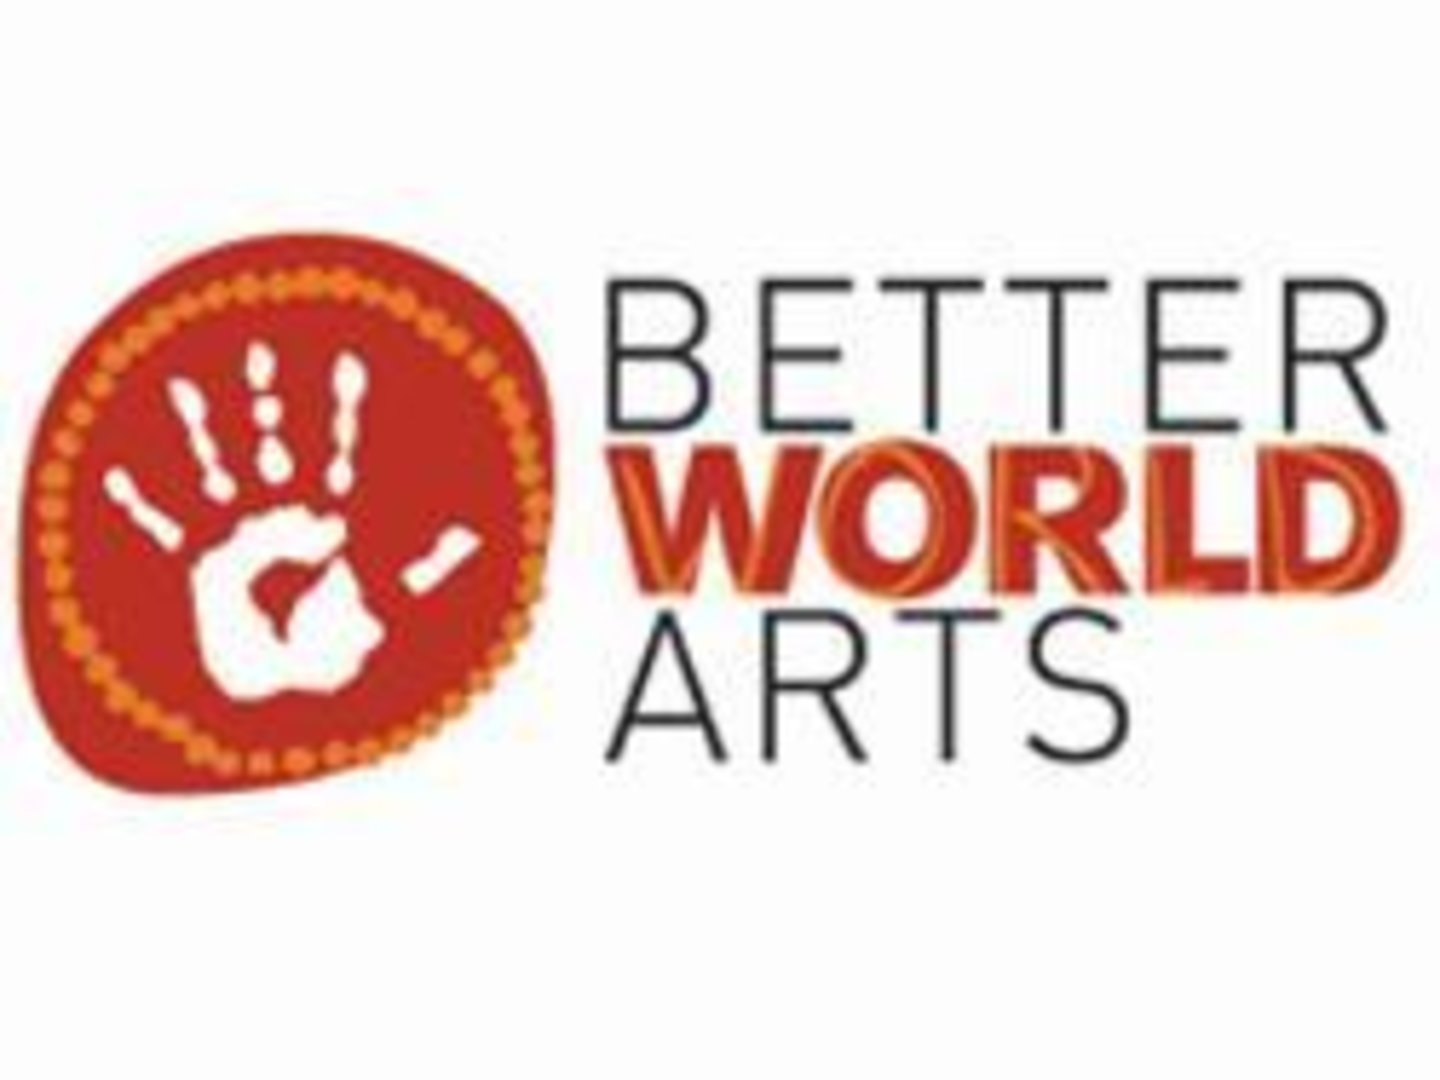 Better World Arts Logo Square.jpeg